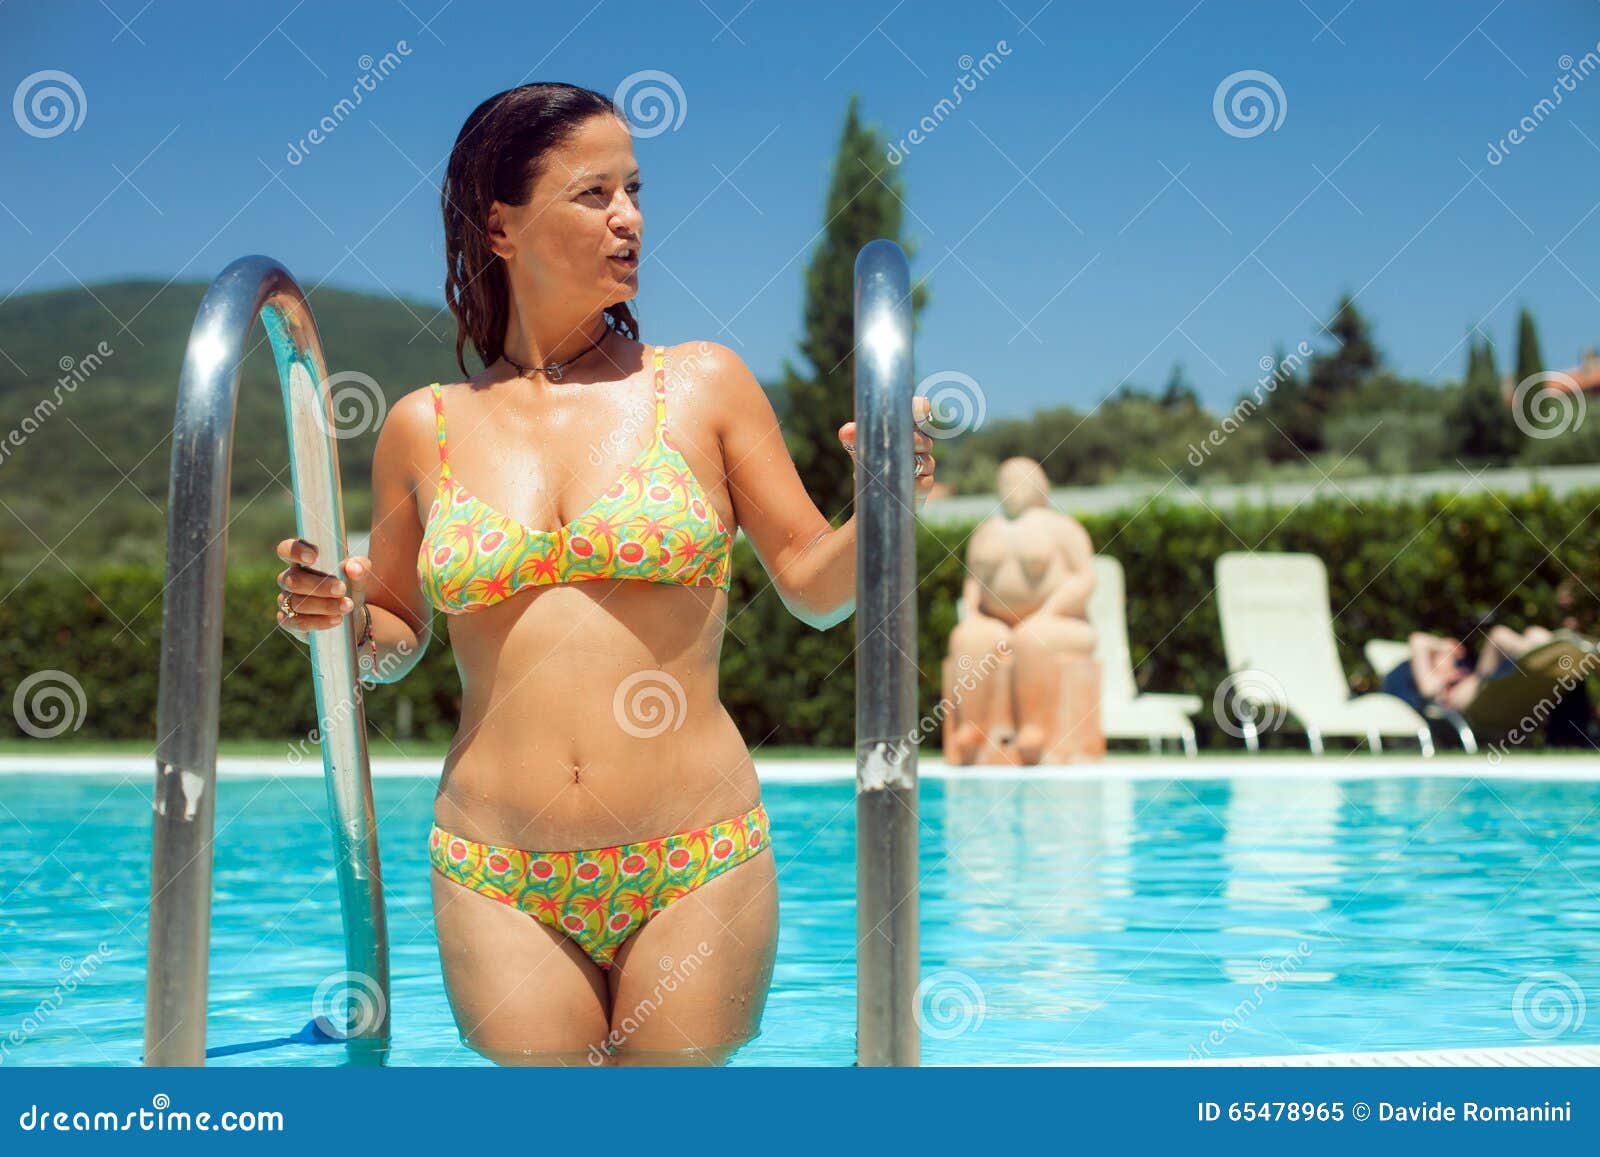 adam gideon add photo pictures of fat women in bikinis